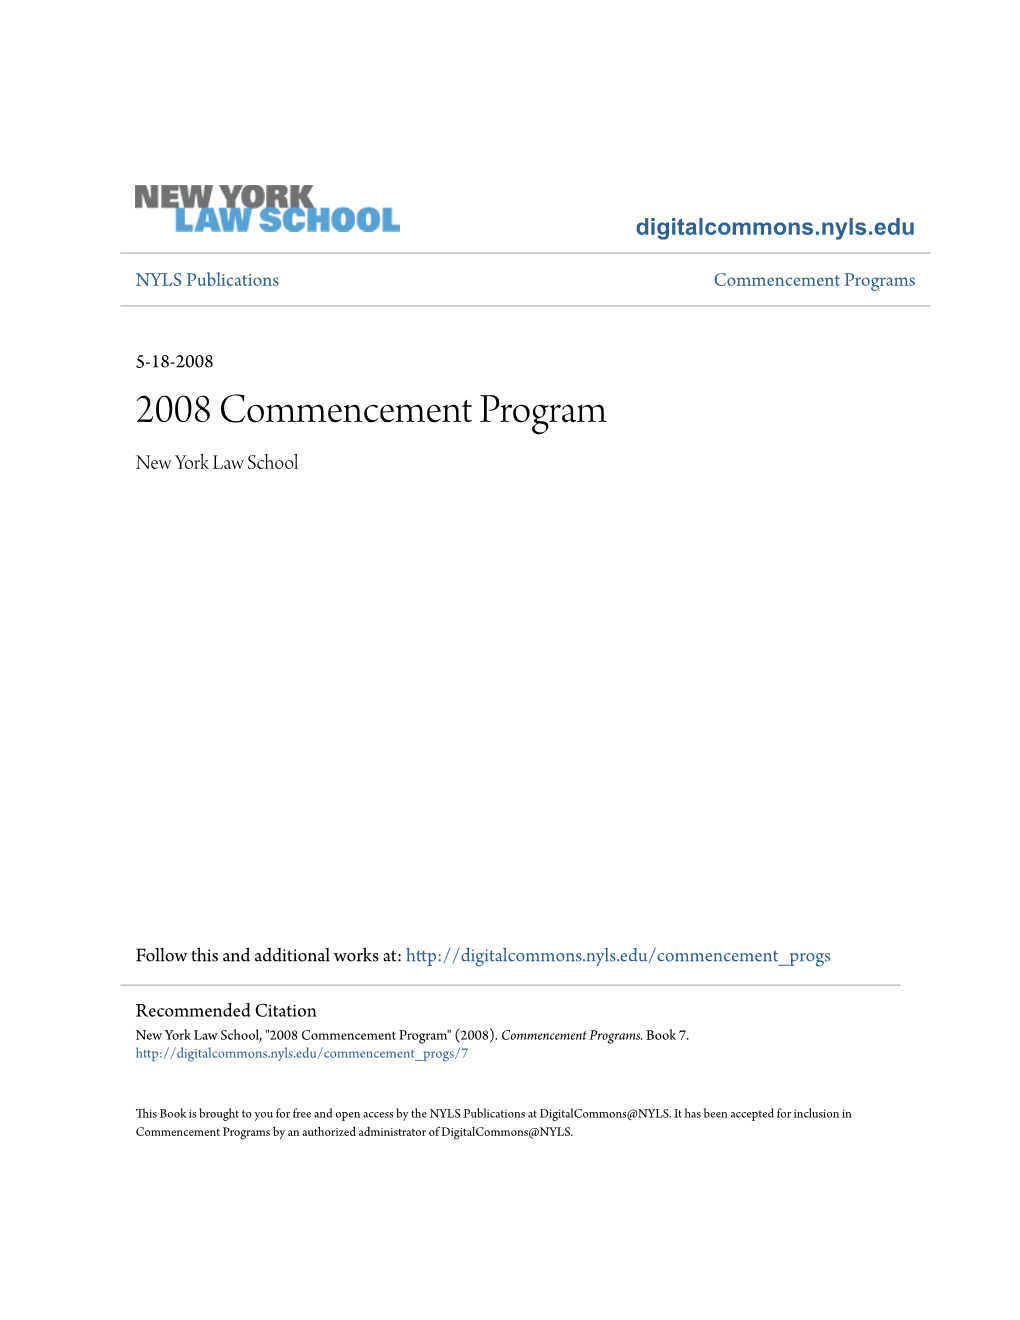 2008 Commencement Program New York Law School